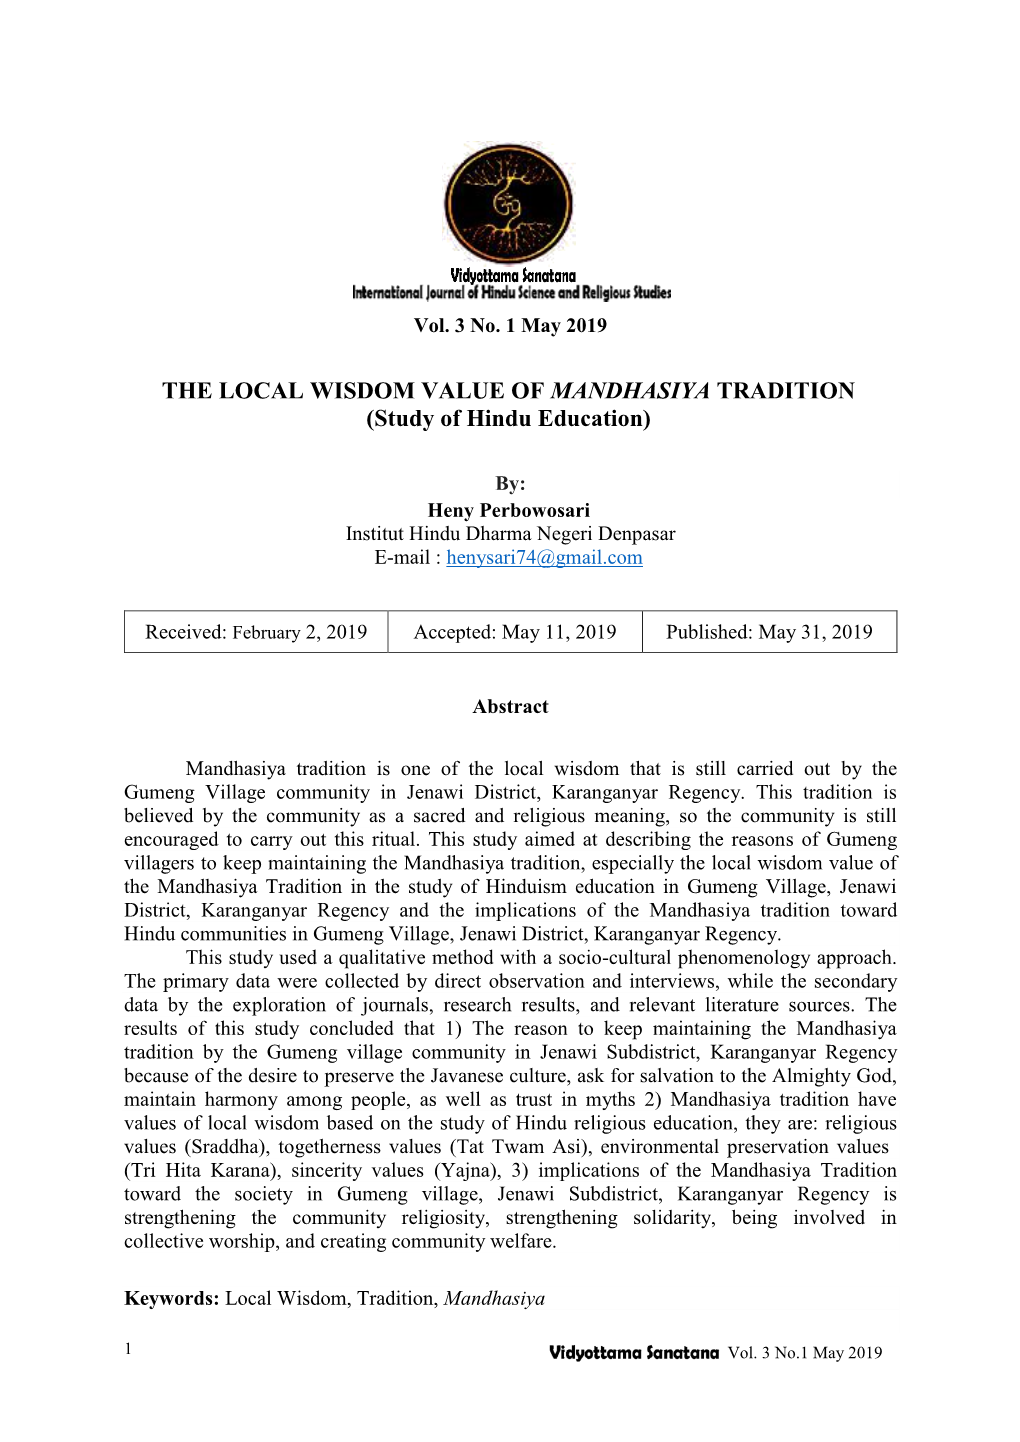 THE LOCAL WISDOM VALUE of MANDHASIYA TRADITION (Study of Hindu Education)